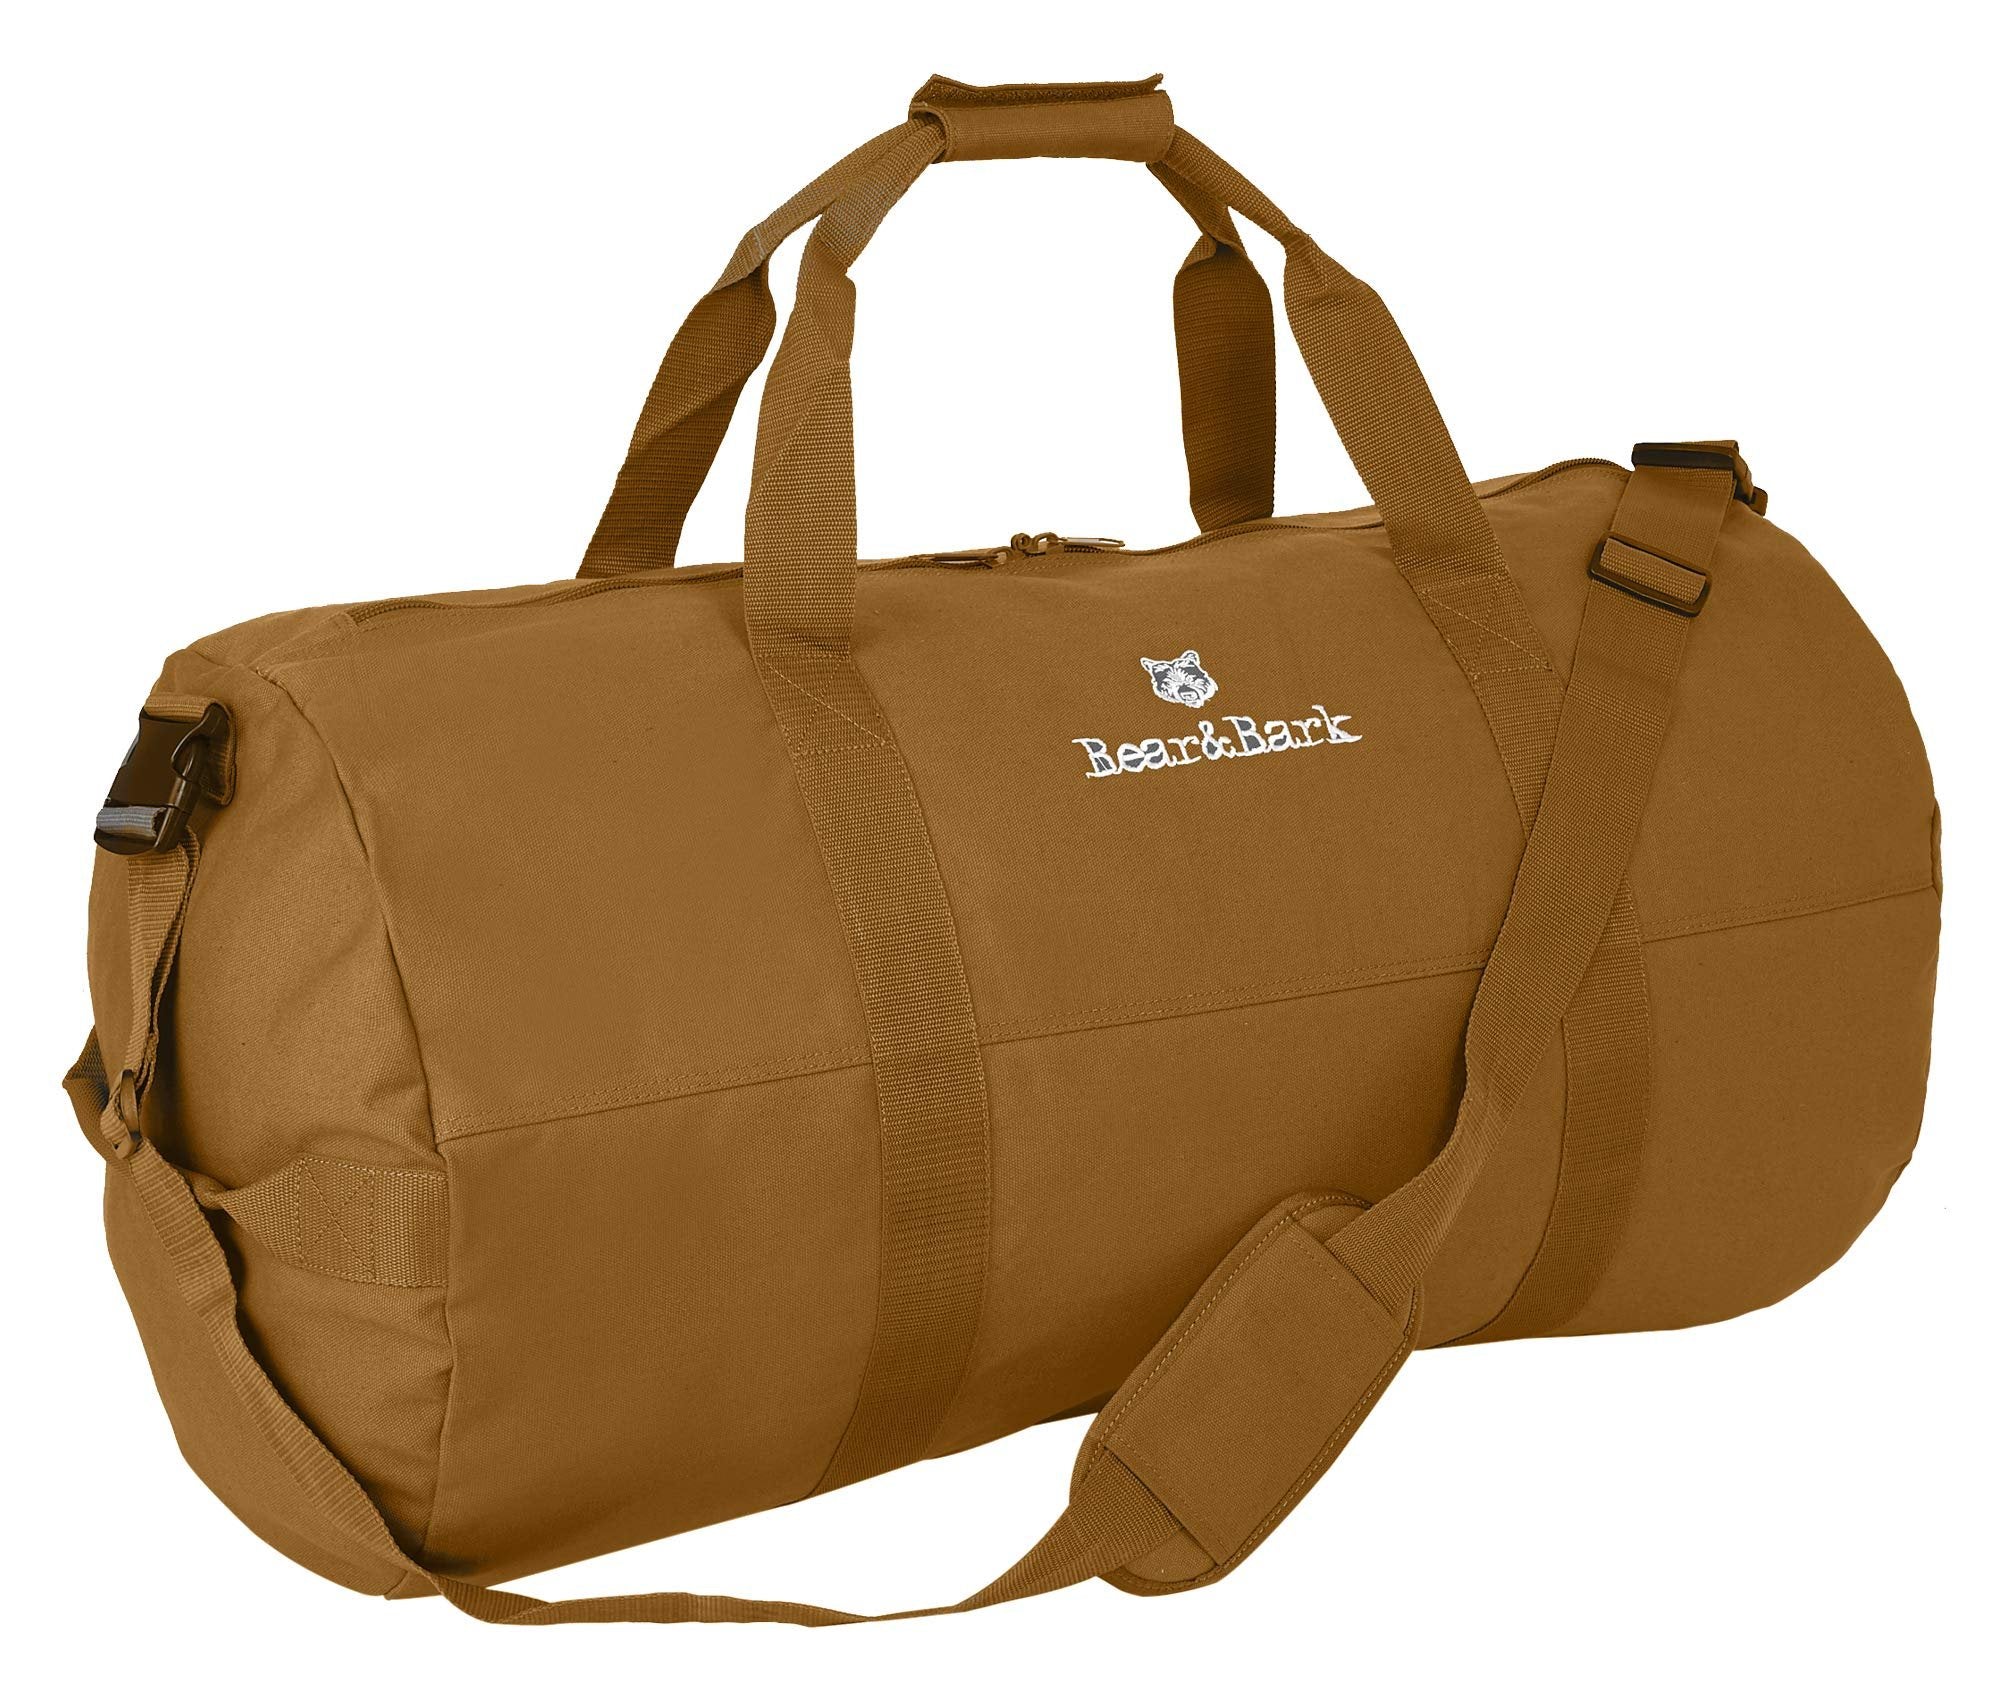 Bear&Bark Desert Brown Duffle Bag - Standard 32 X 18" - 133.4L - Military Style Travel Luggage for Men and Women"